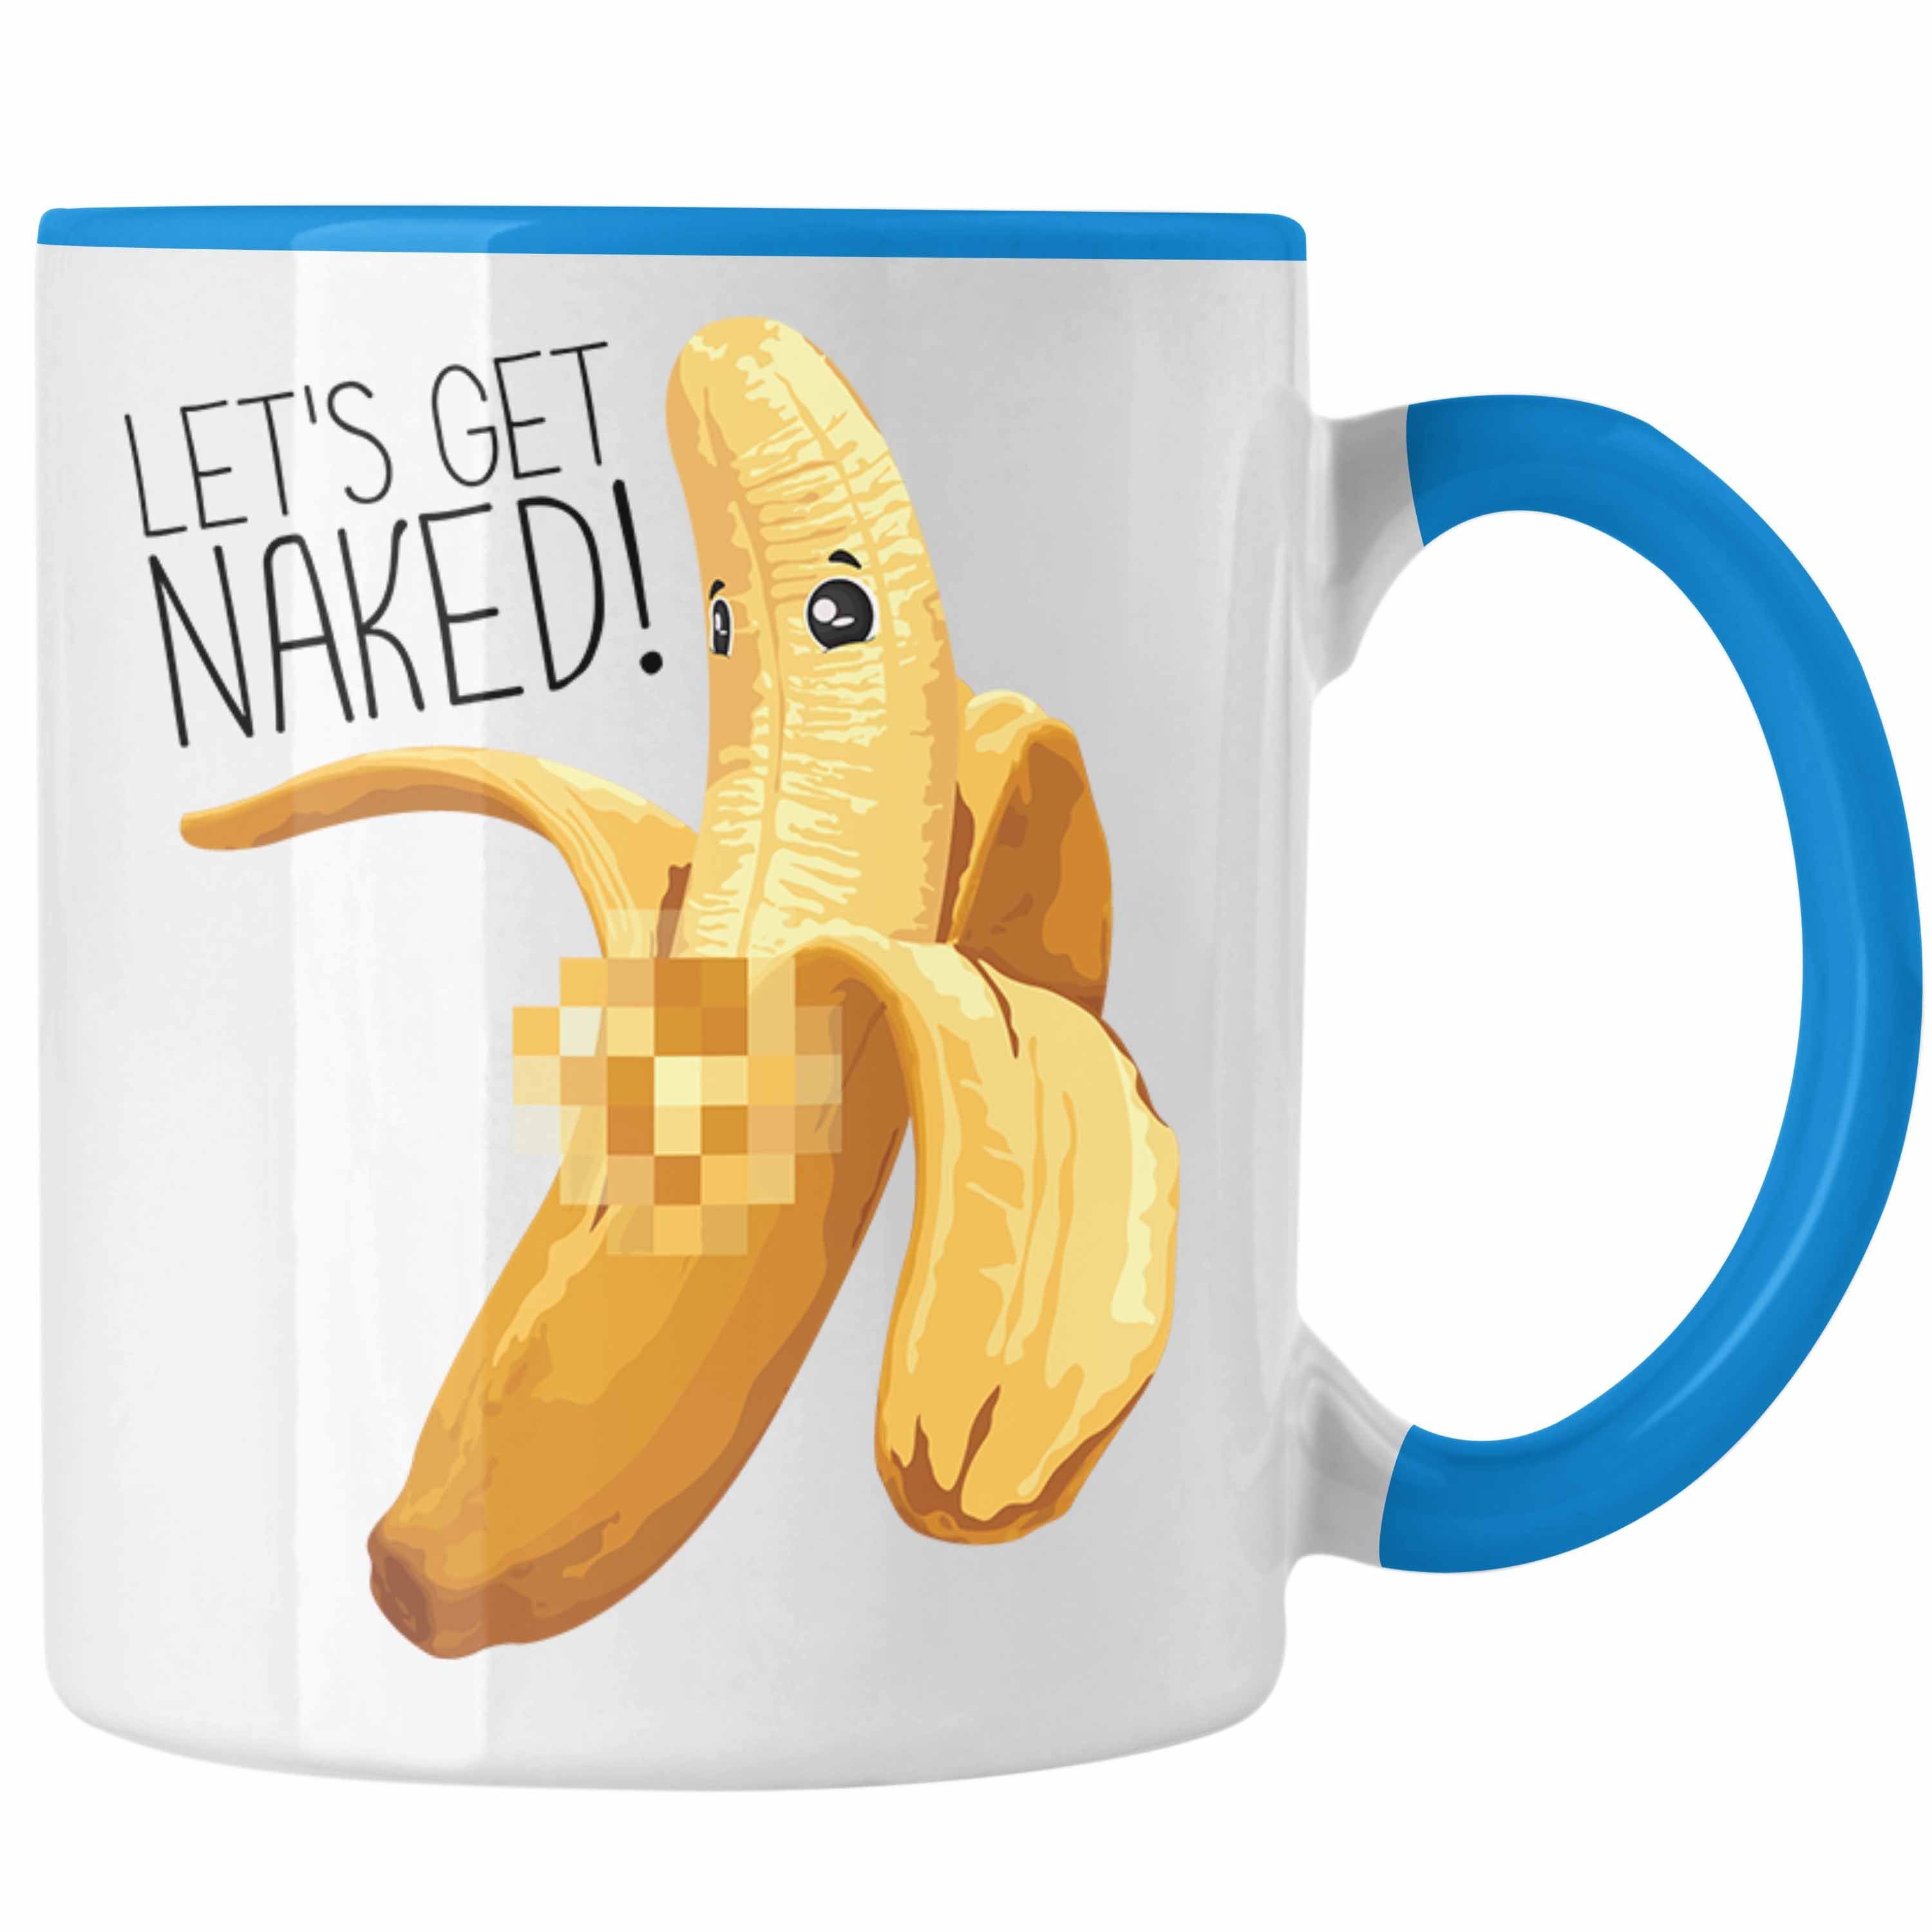 Trendation Tasse Banane Lets Naked Erwachsener Striptease Get Bech Tasse Humor Geschenk Blau